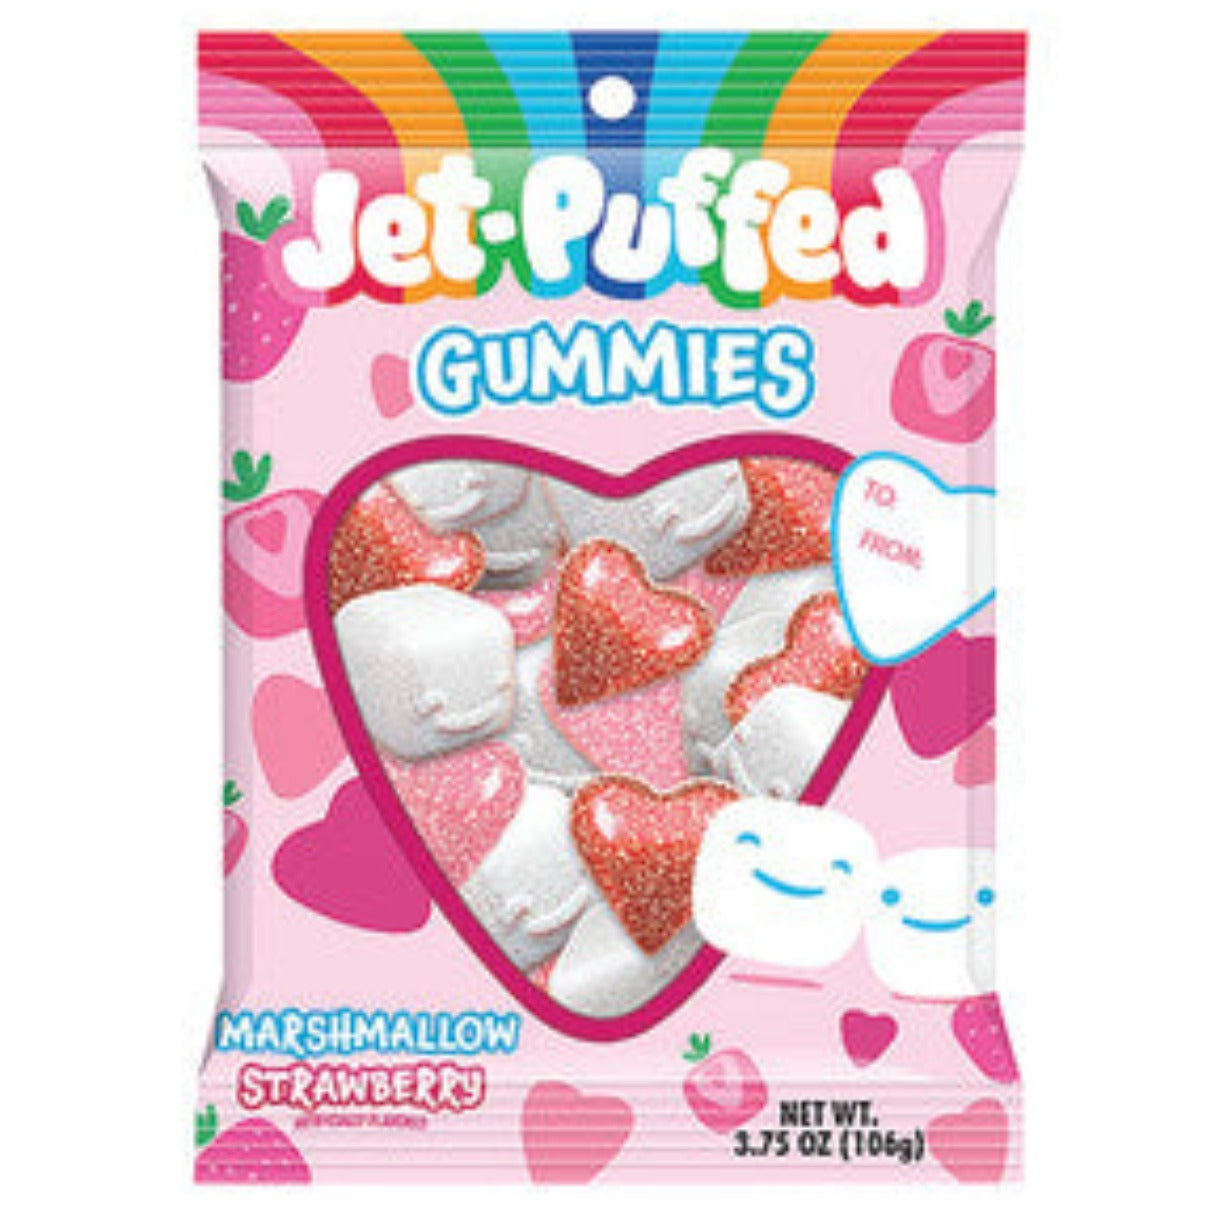 Jet-Puffed Marshmallow Strawberry Gummies 3.75oz - 24ct